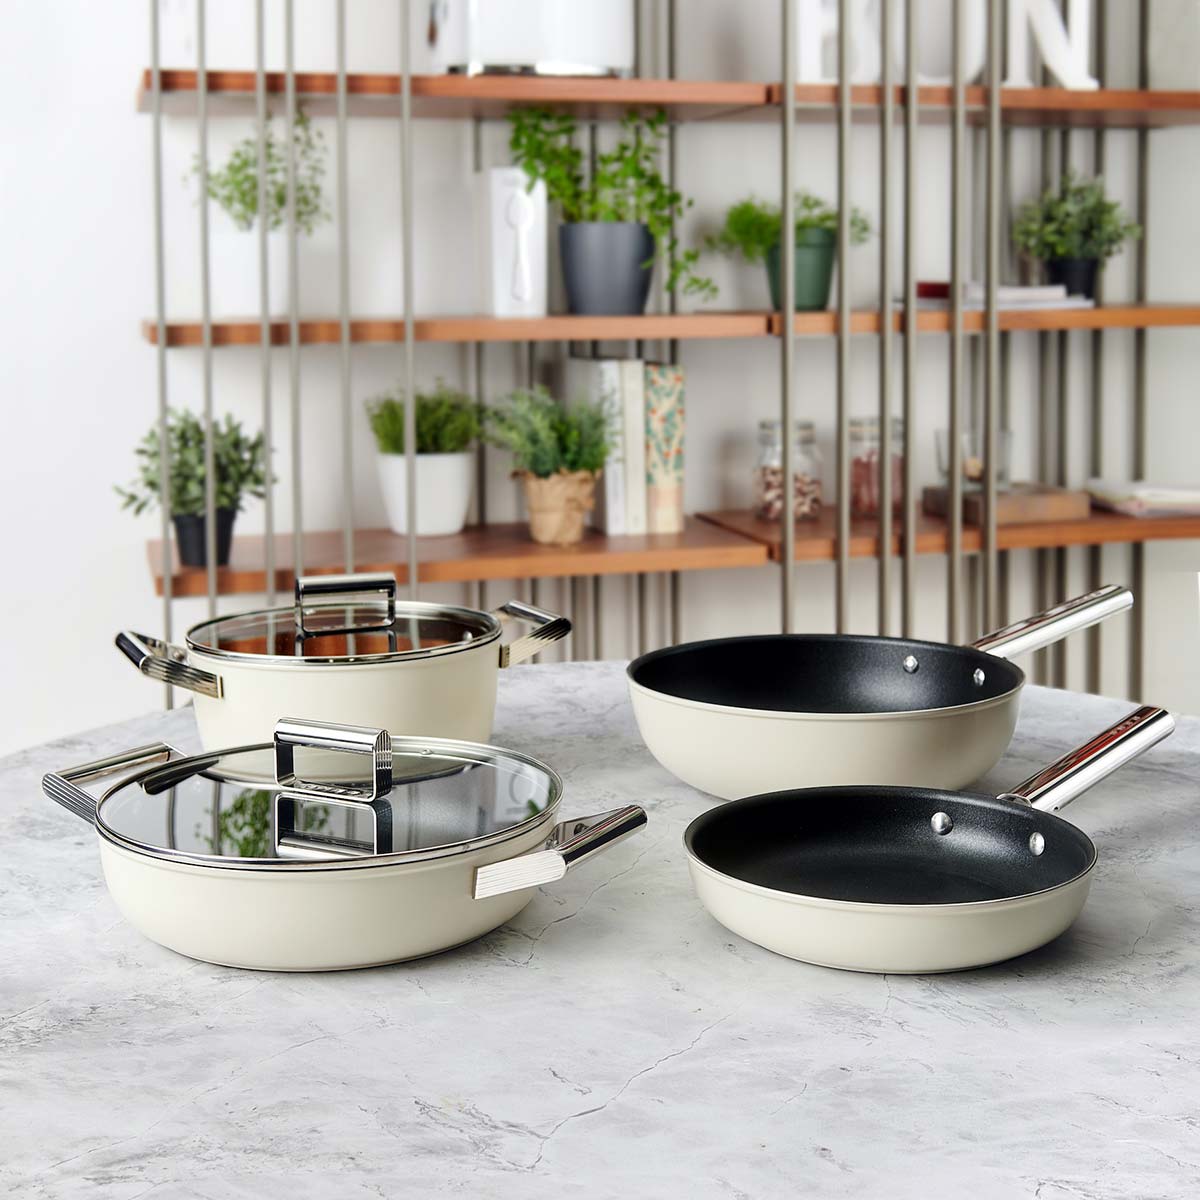 Cookware by Smeg - Design by @deepdesign